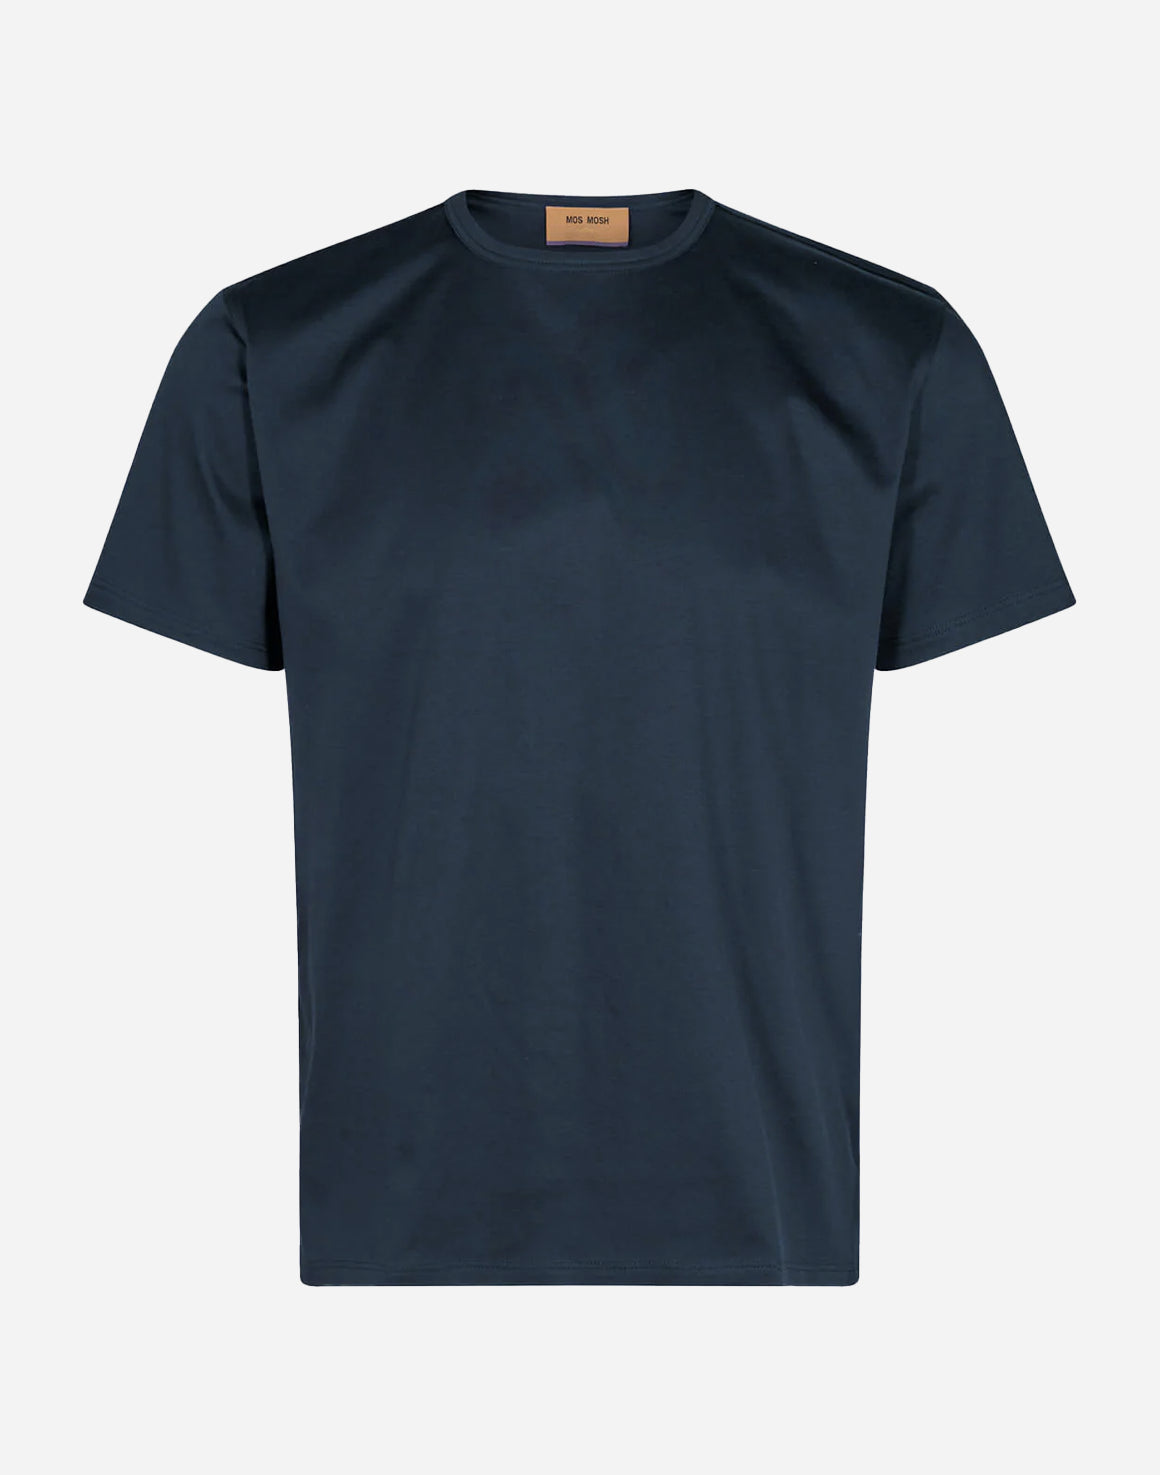 Perry T-shirt - Navy - Mos Mosh Gallery - Kul og Koks